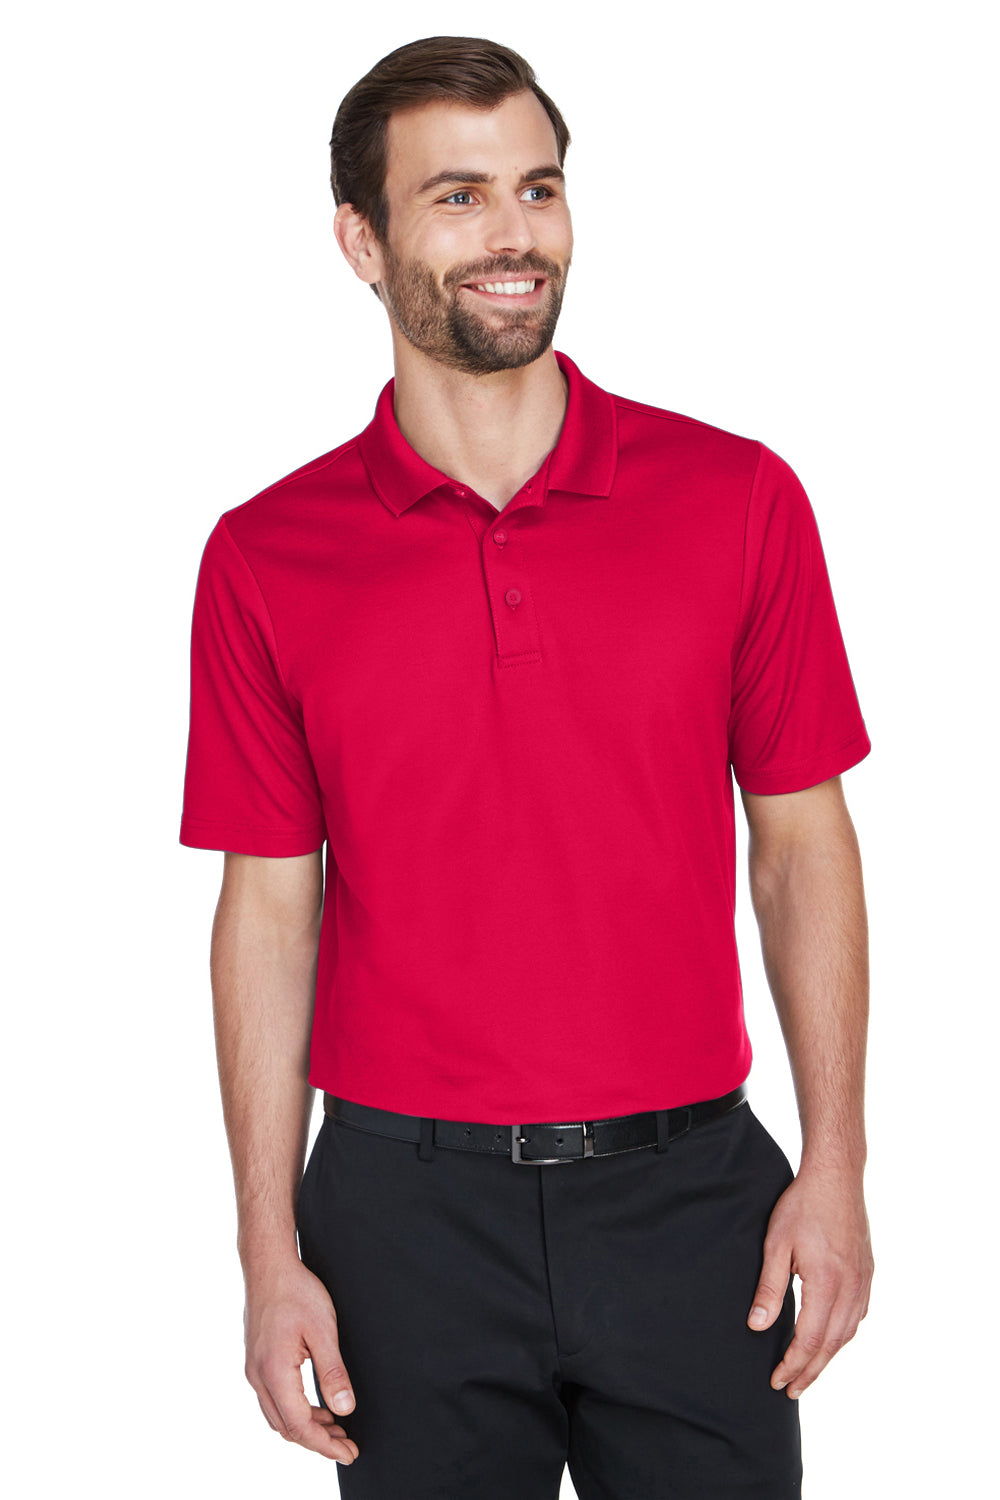 Devon & Jones Mens CrownLux Performance Moisture Wicking Short Sleeve Polo Shirt - Red